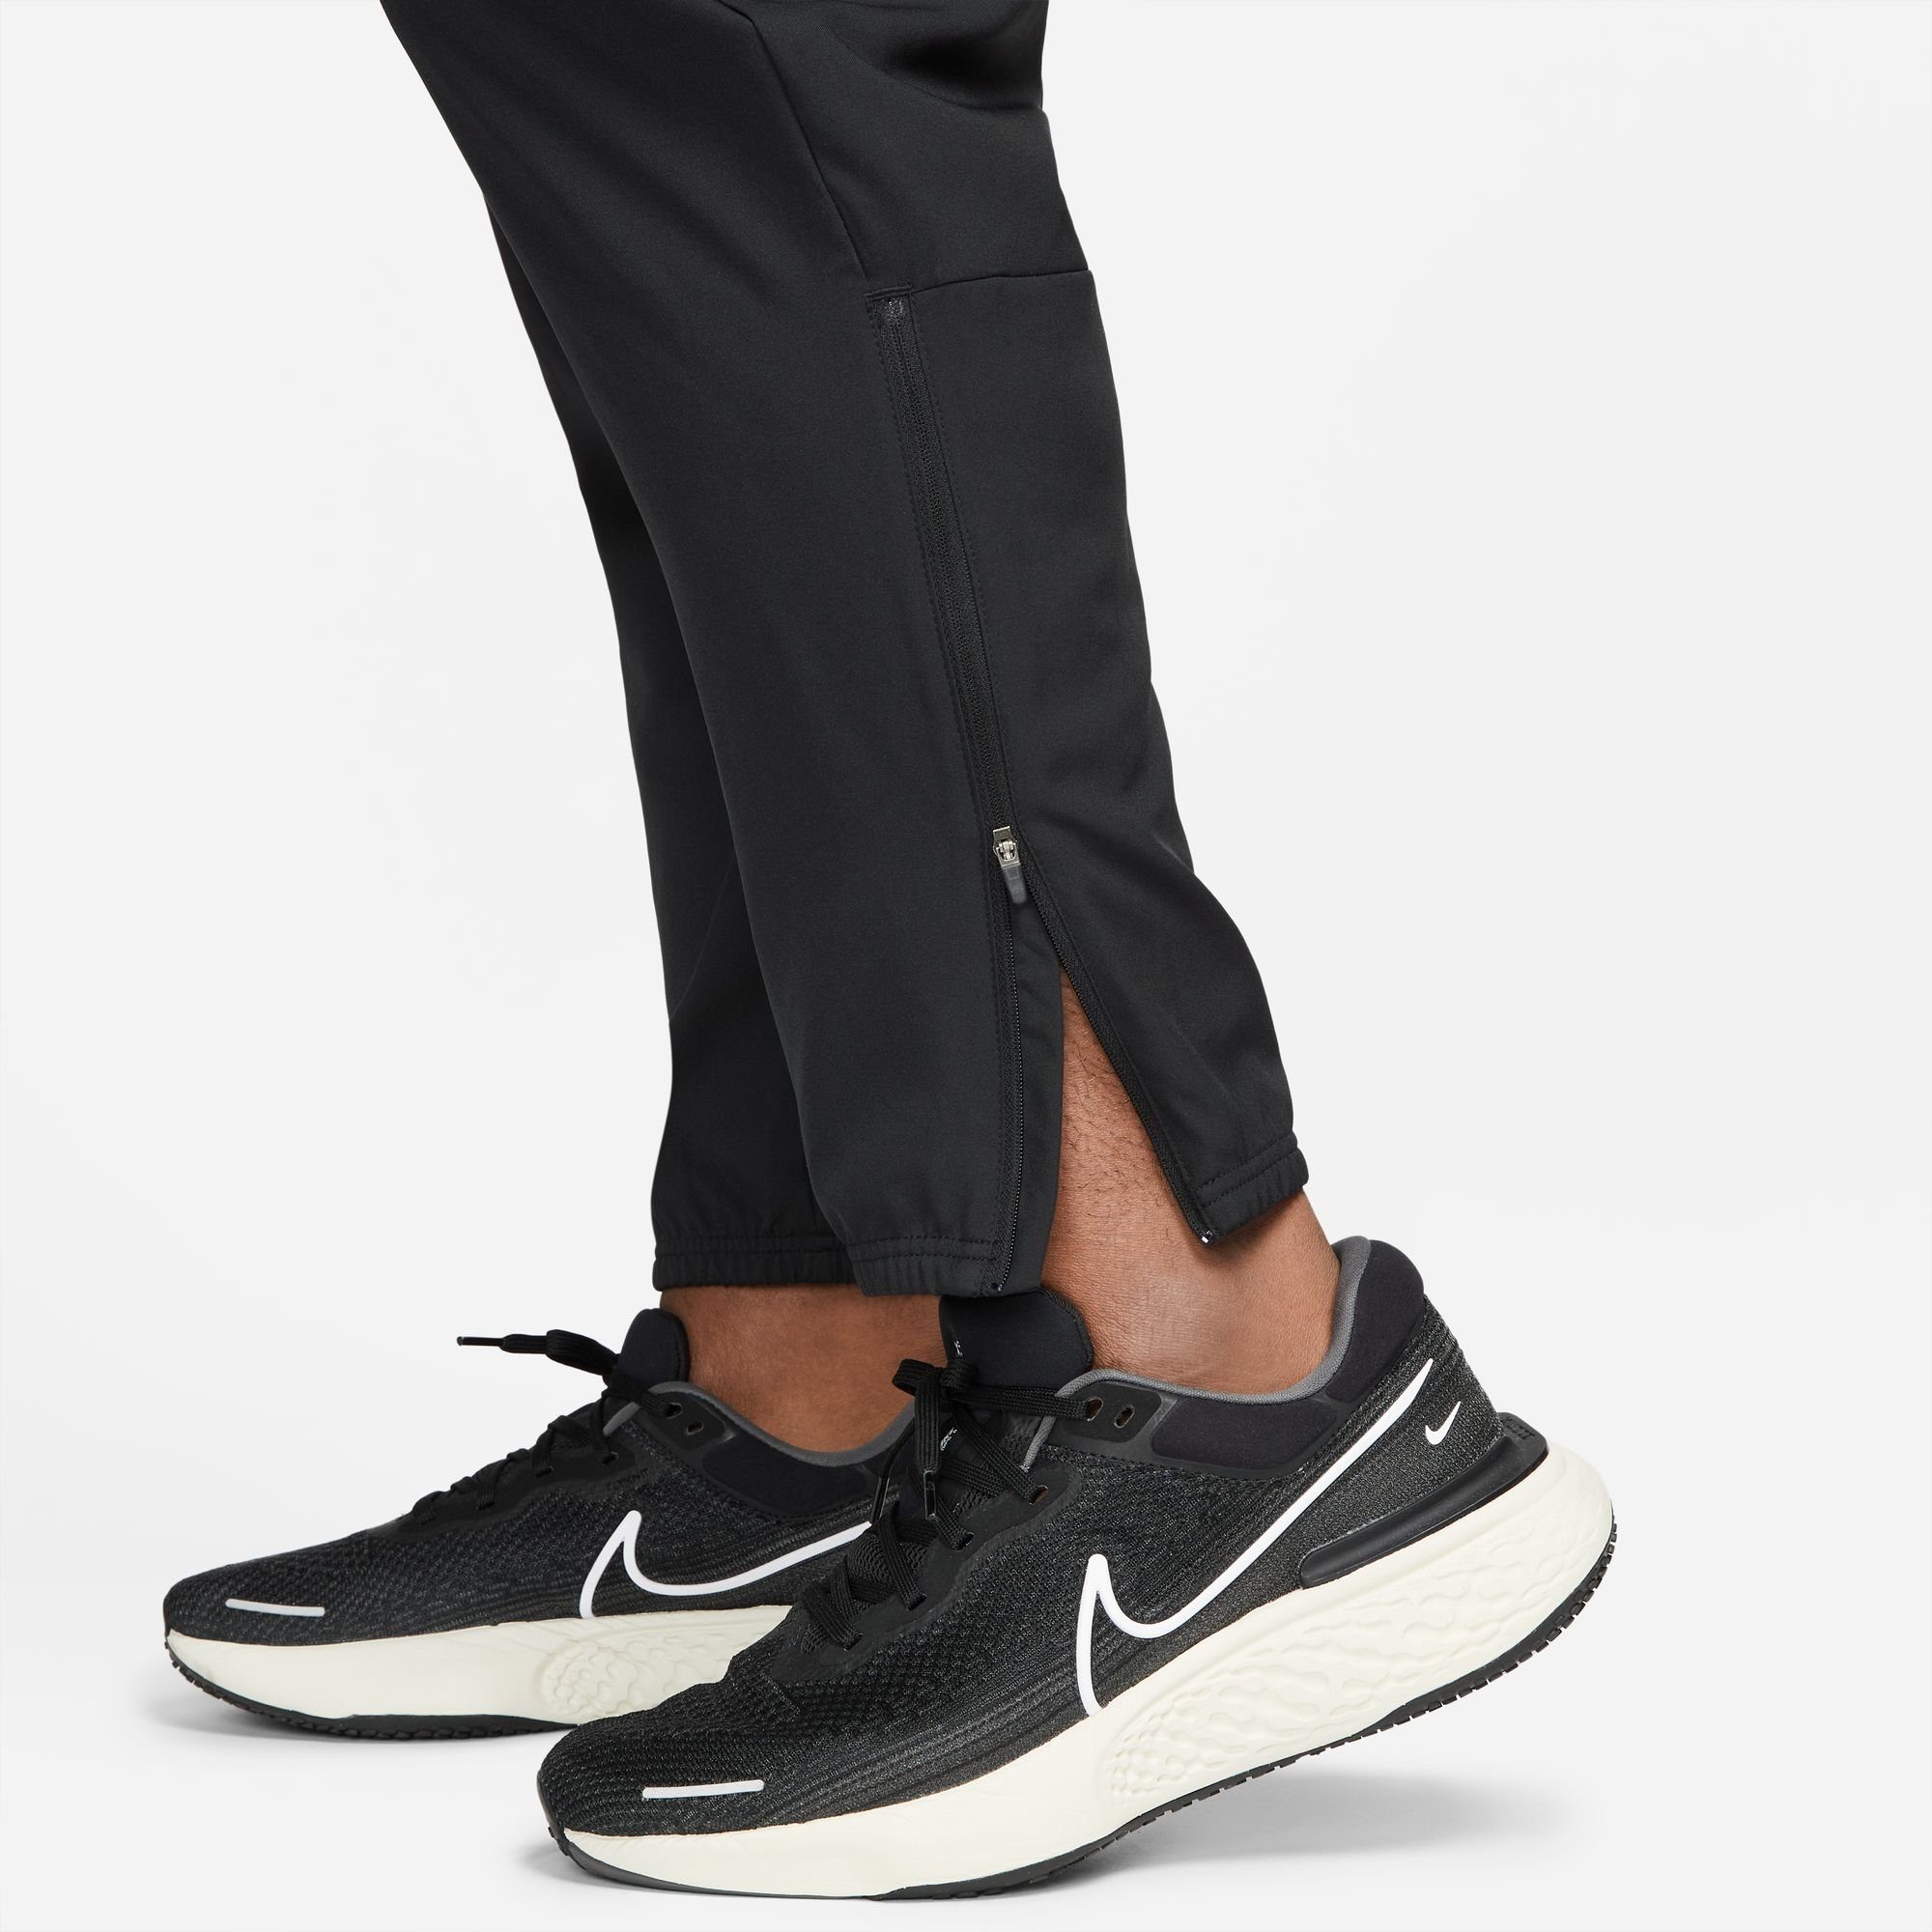 PANTS RUNNING CHALLENGER Laufhose DRI-FIT SILV WOVEN MEN'S Nike BLACK/REFLECTIVE